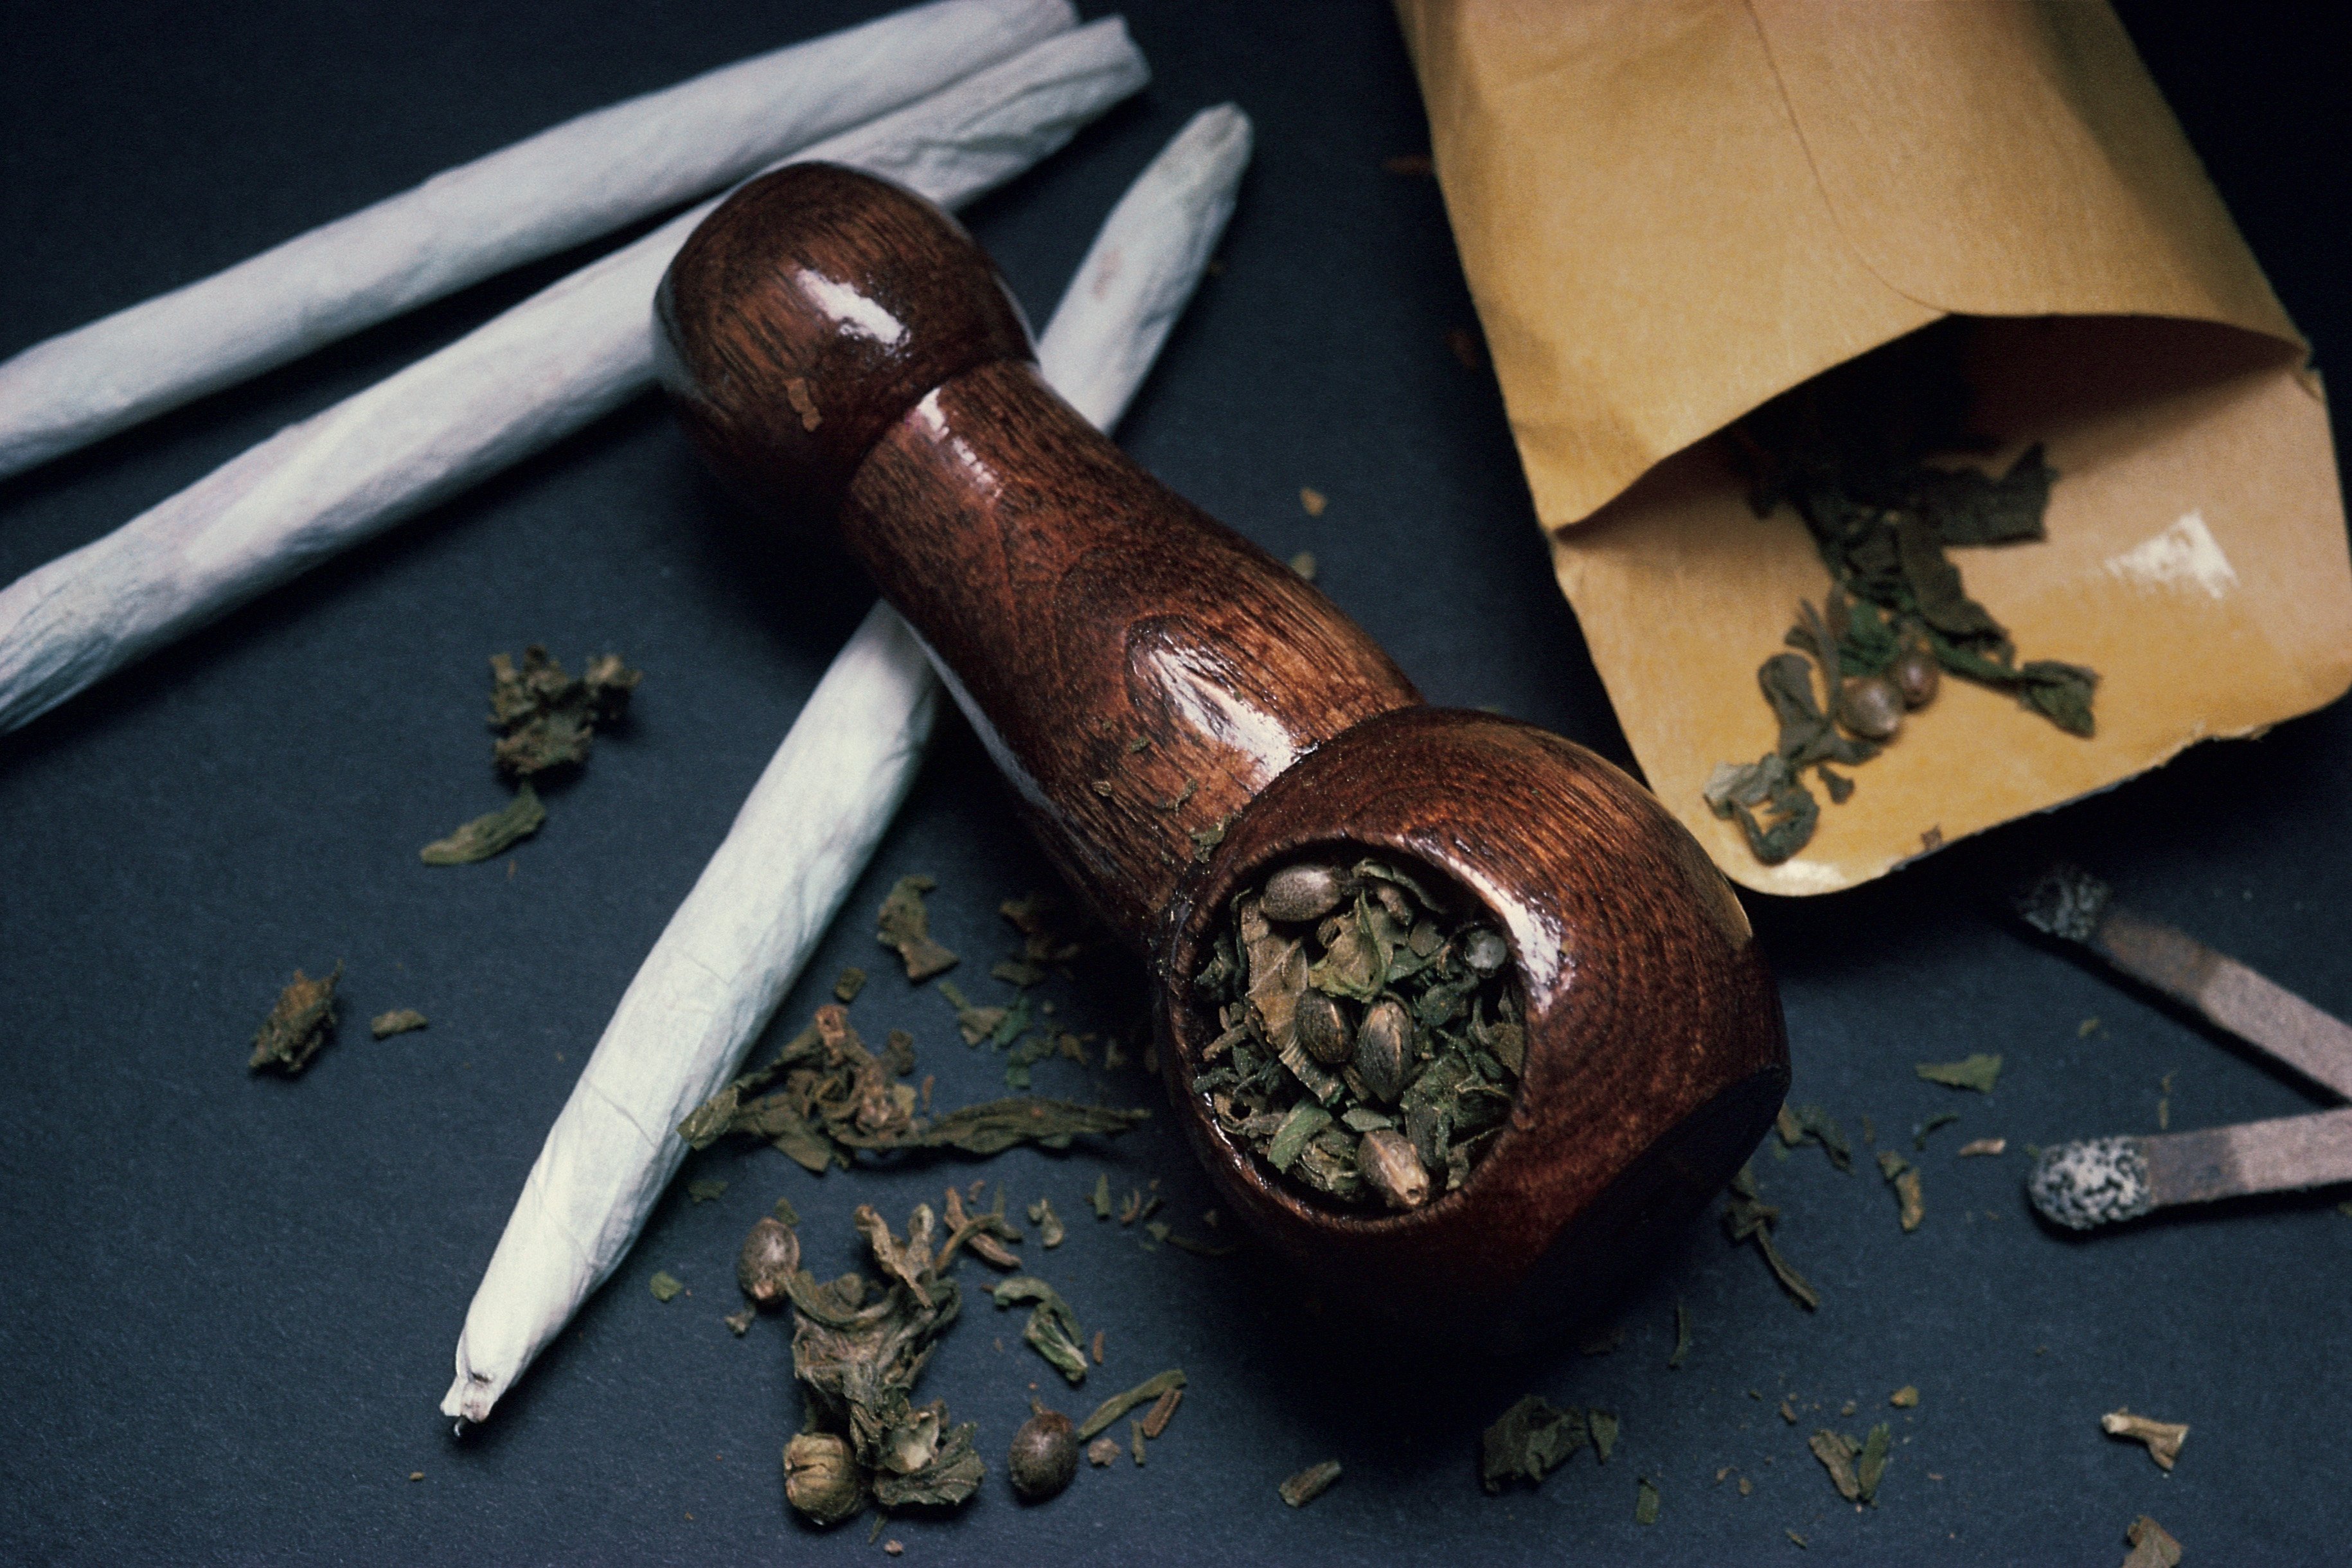 weed, Drugs, Marijuana, 420, Nature, Psychedelic, Plant, Cannabis, Rasta, Reggae, Drug, Trippy Wallpaper